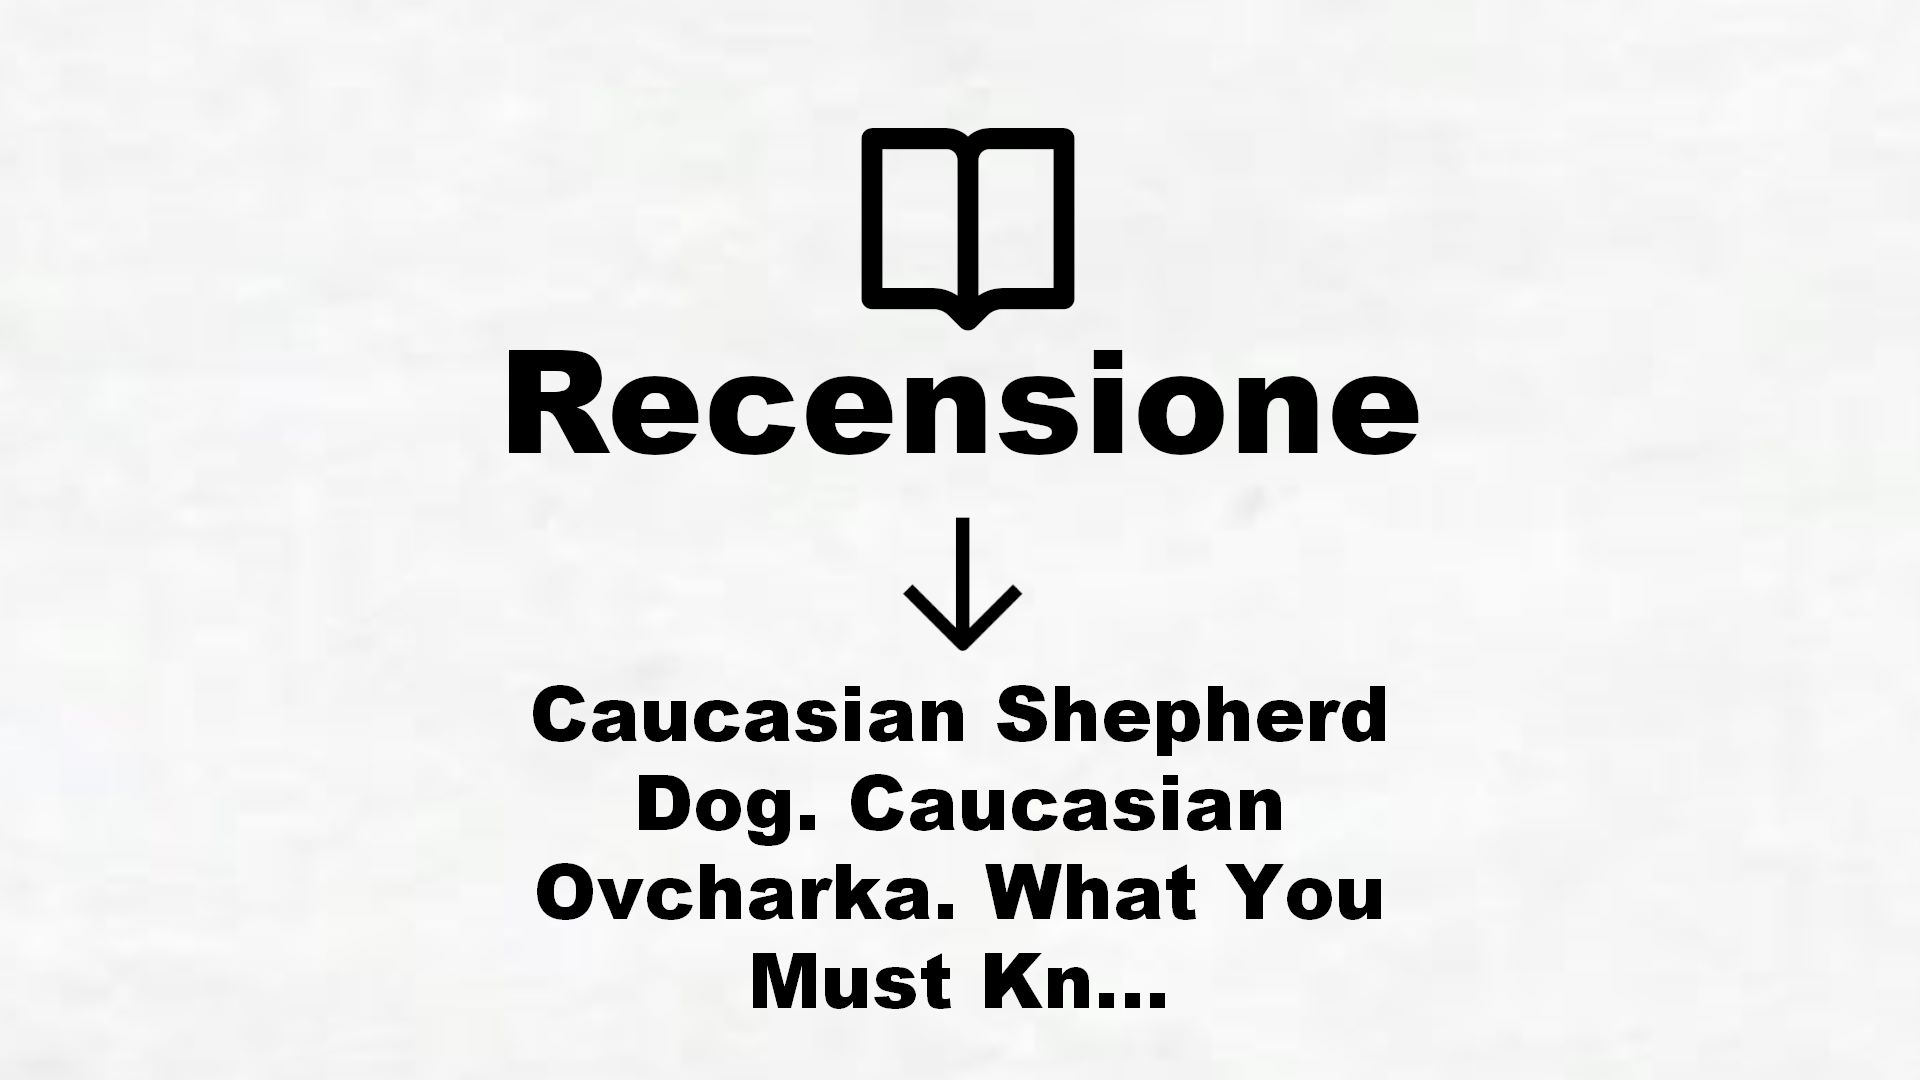 Caucasian Shepherd Dog. Caucasian Ovcharka. What You Must Know Before You Buy a Caucasian Shepherd Dog, Caucasian Ovcharka as a Pet. – Recensione Libro